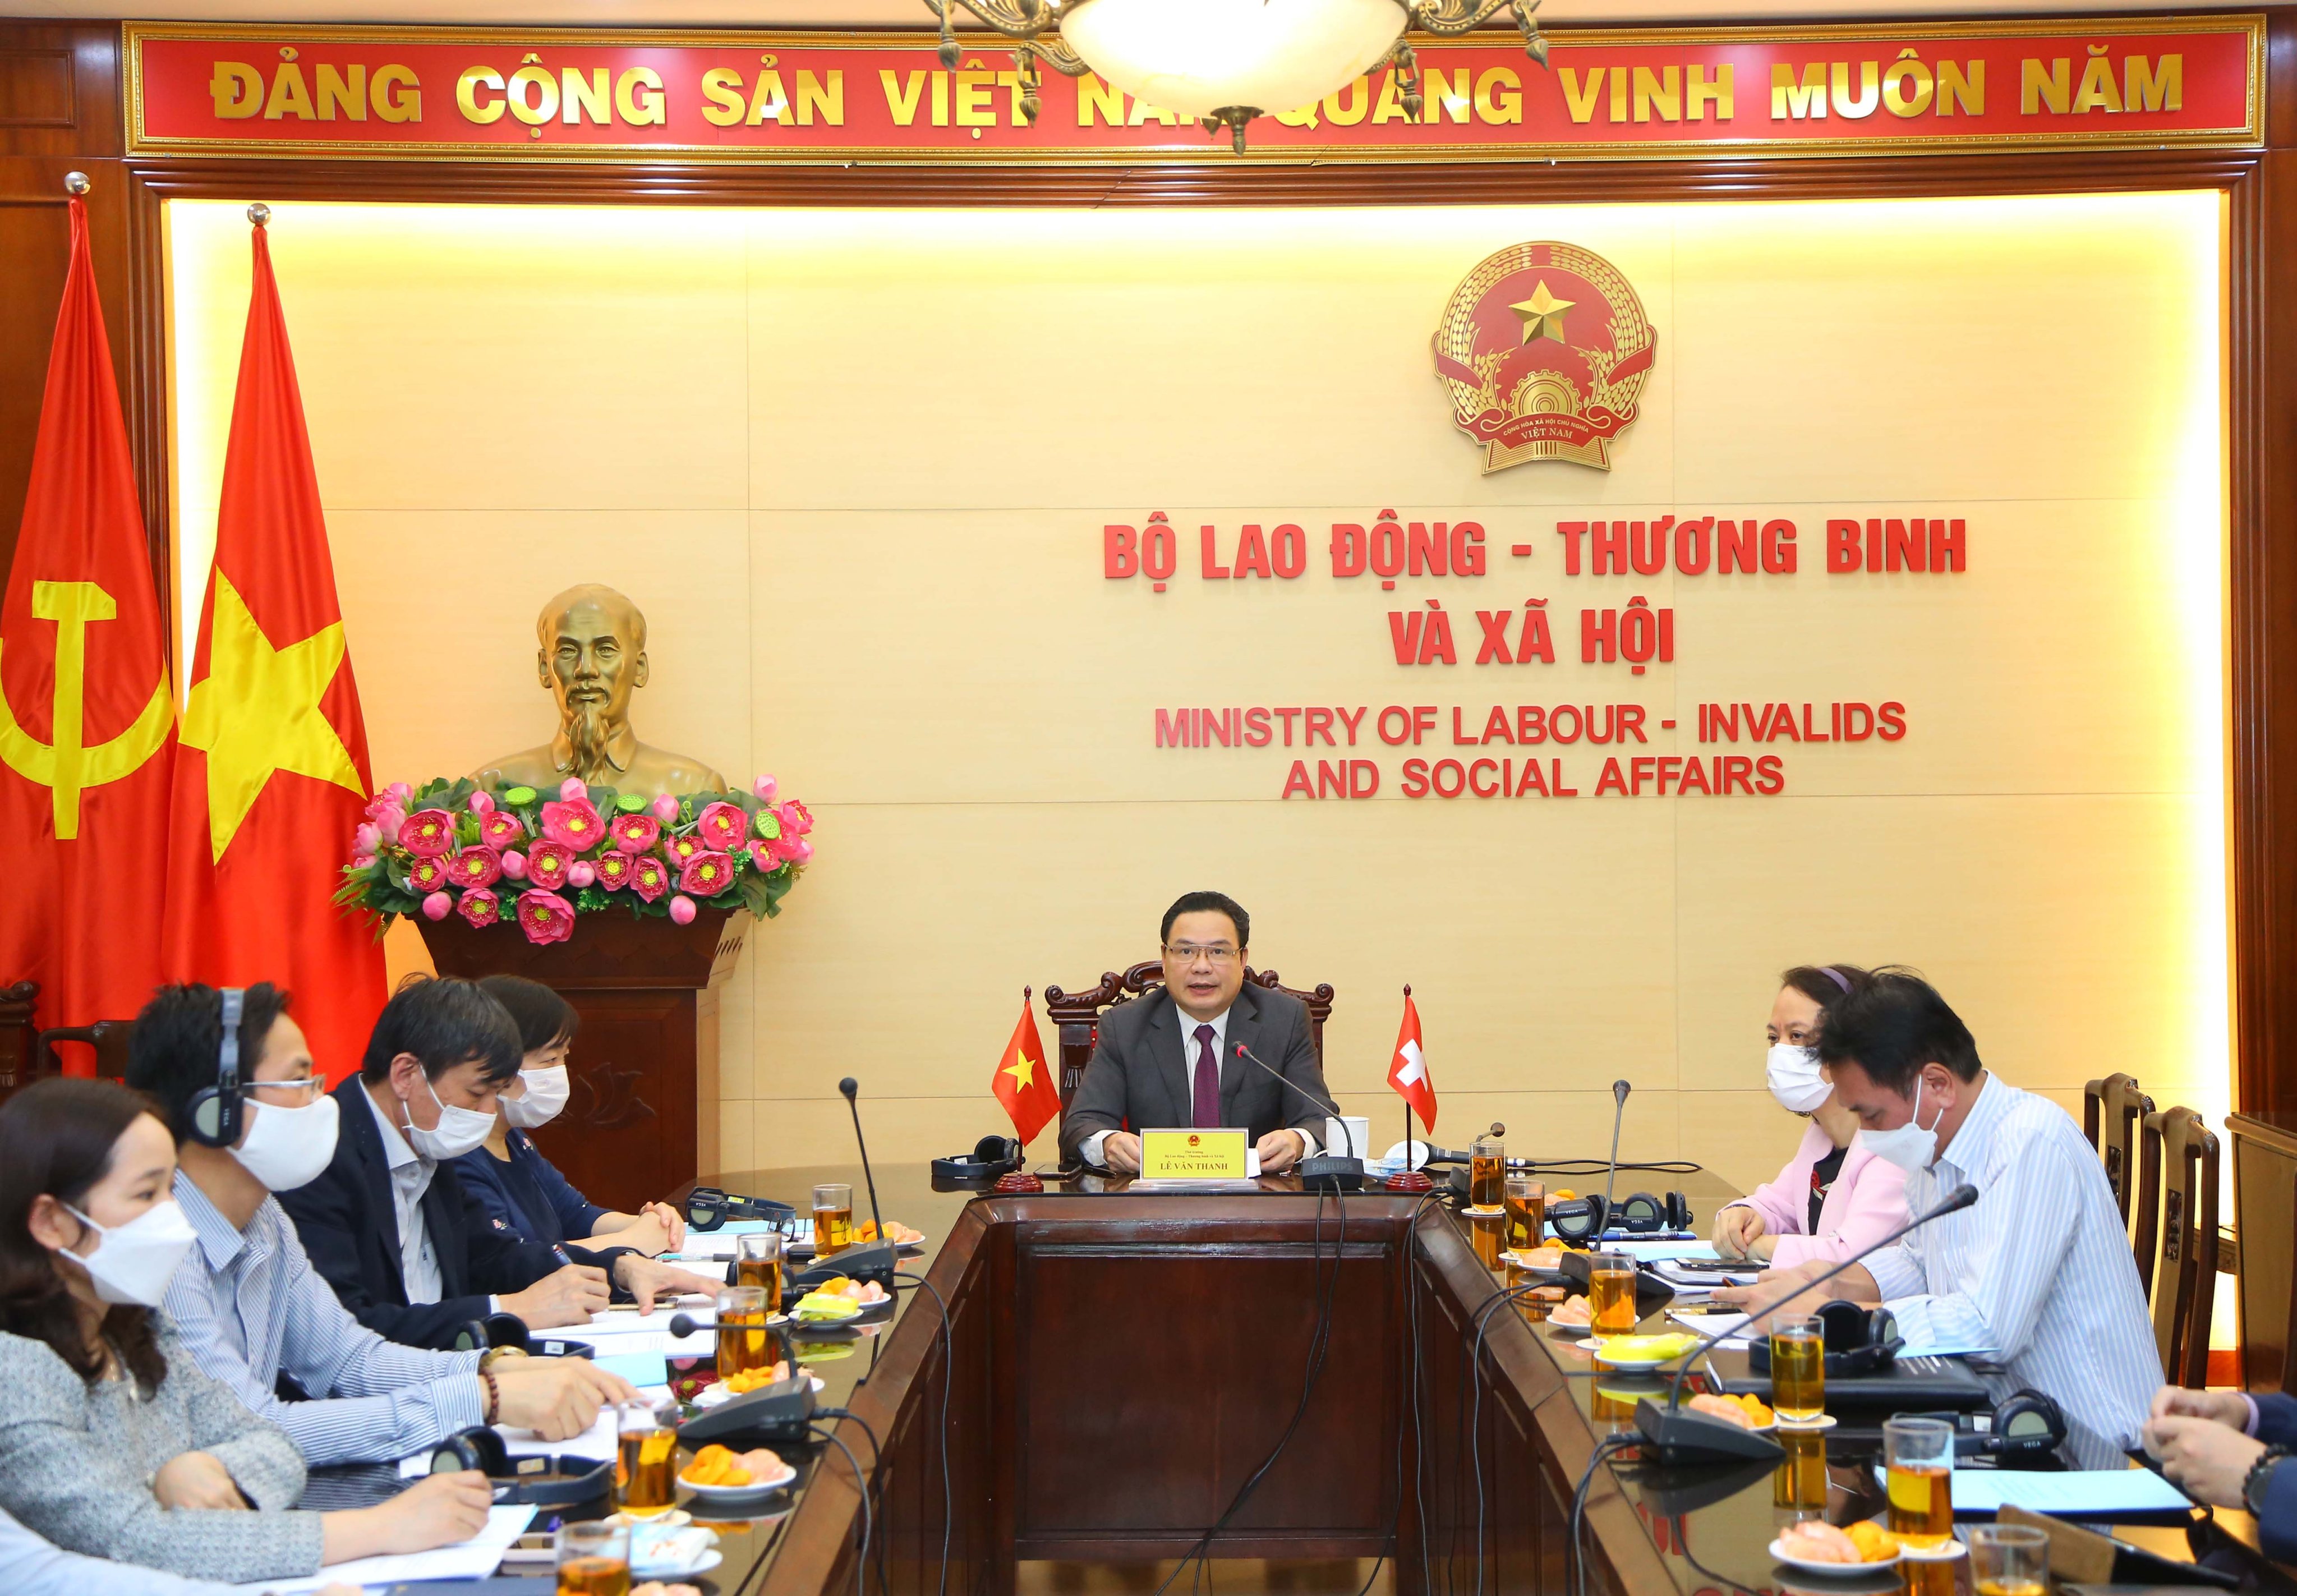 Vietnam and Switzerland promote job security